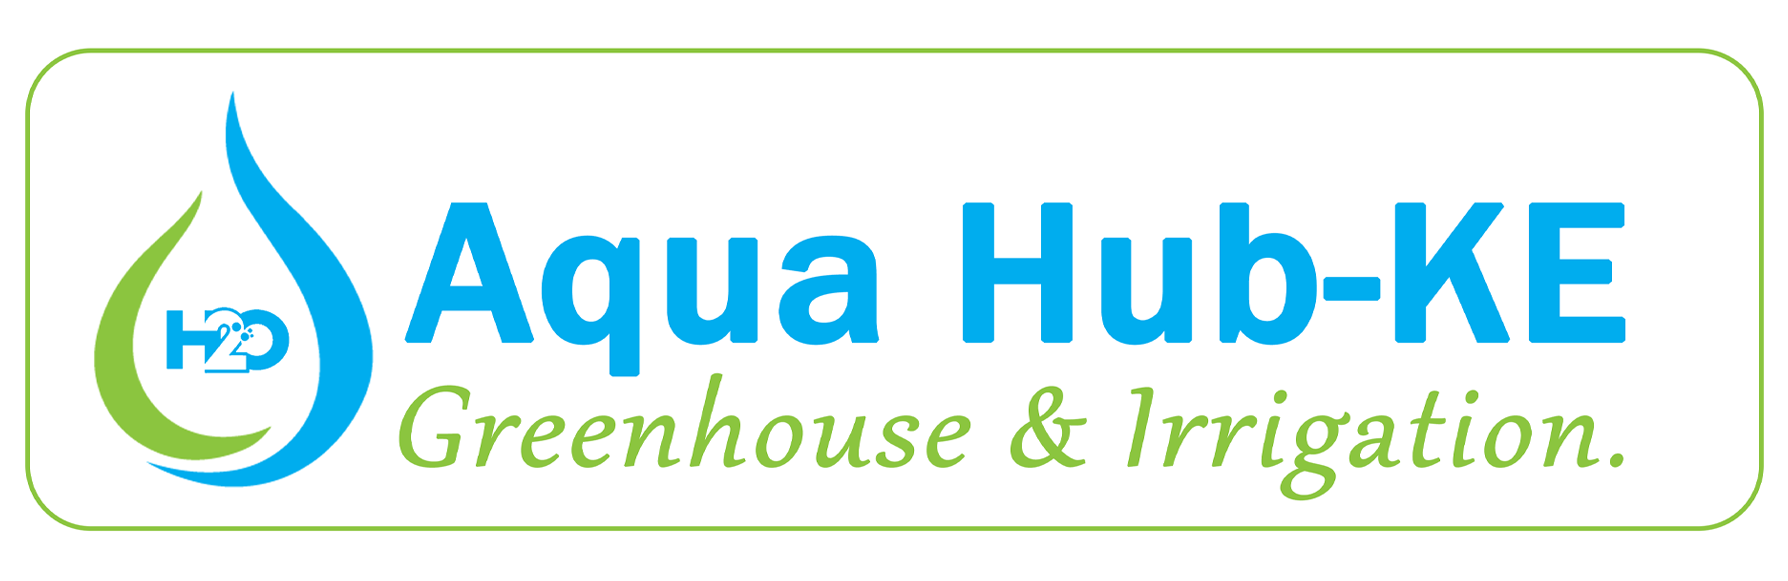 Aqua hub logo